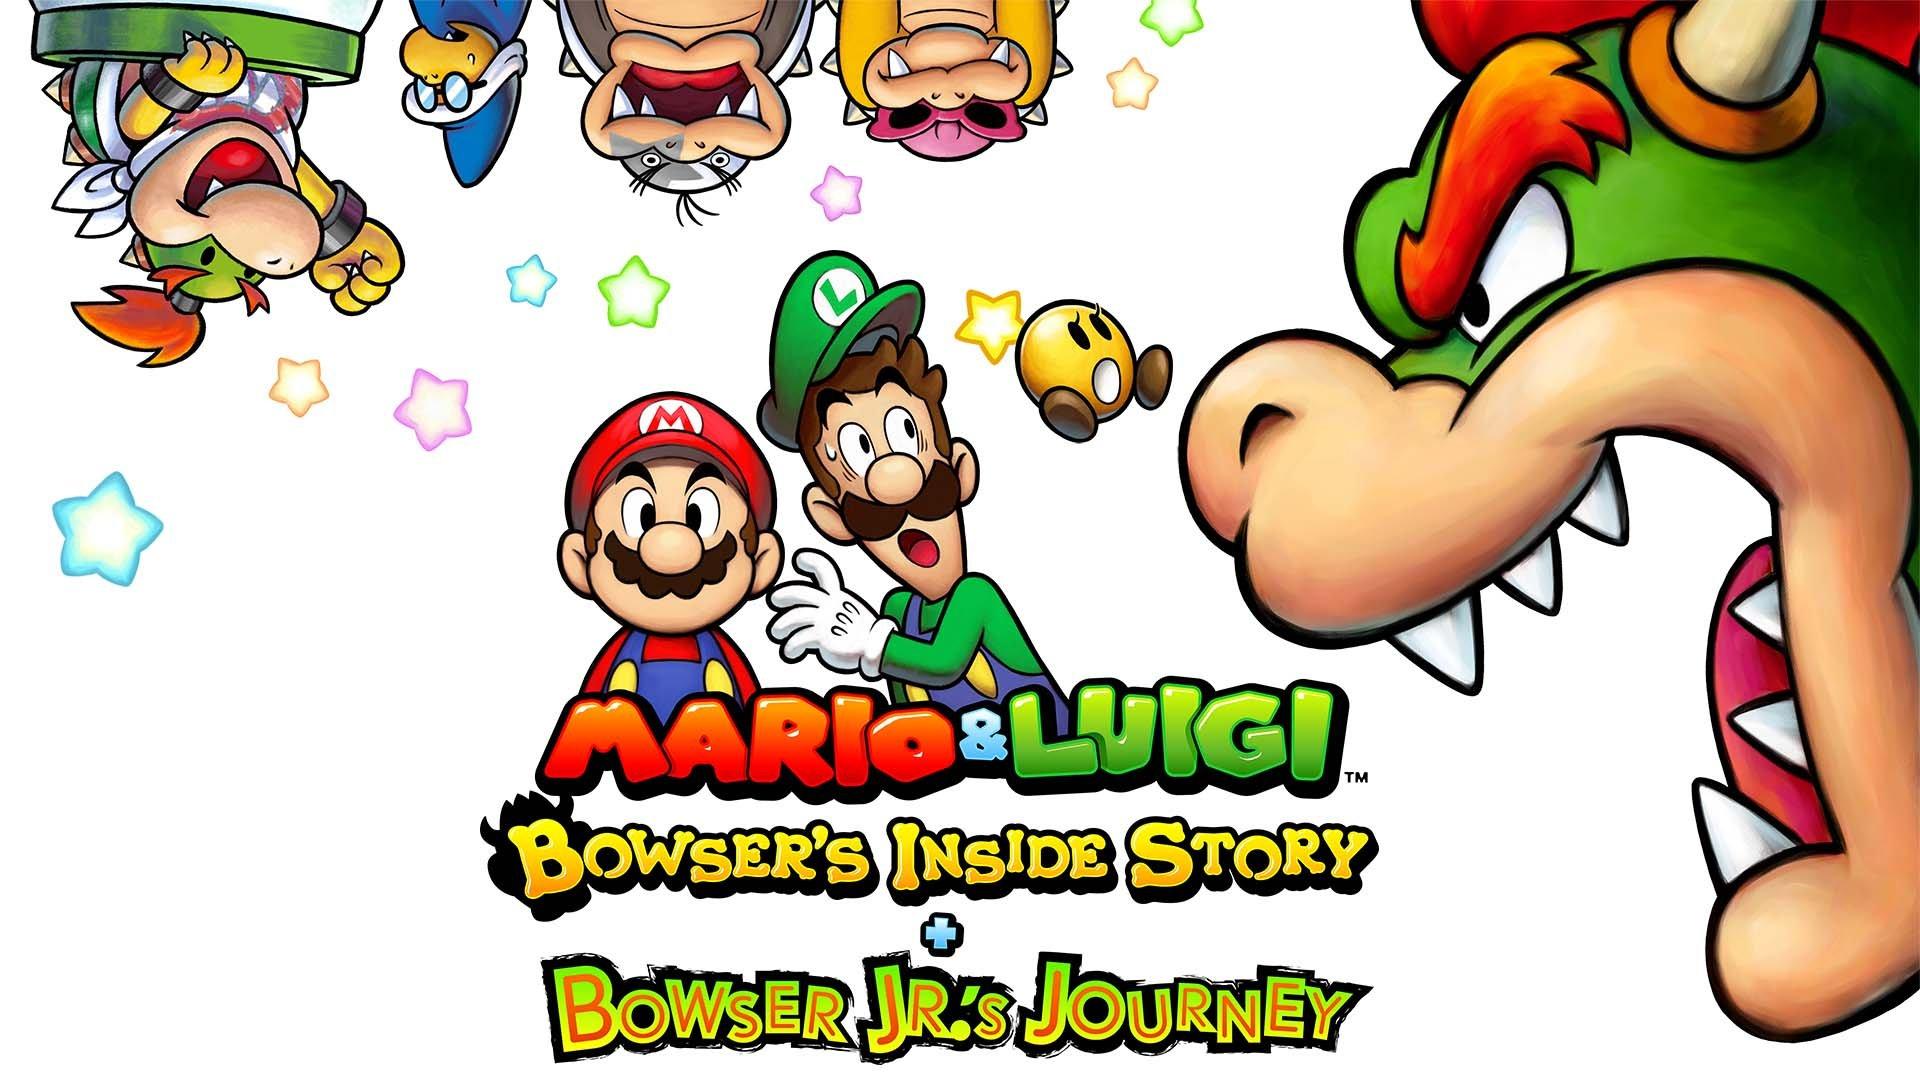 mario & luigi bowser's inside story looks like it should play well on the  miyoo mini : r/MiyooMini